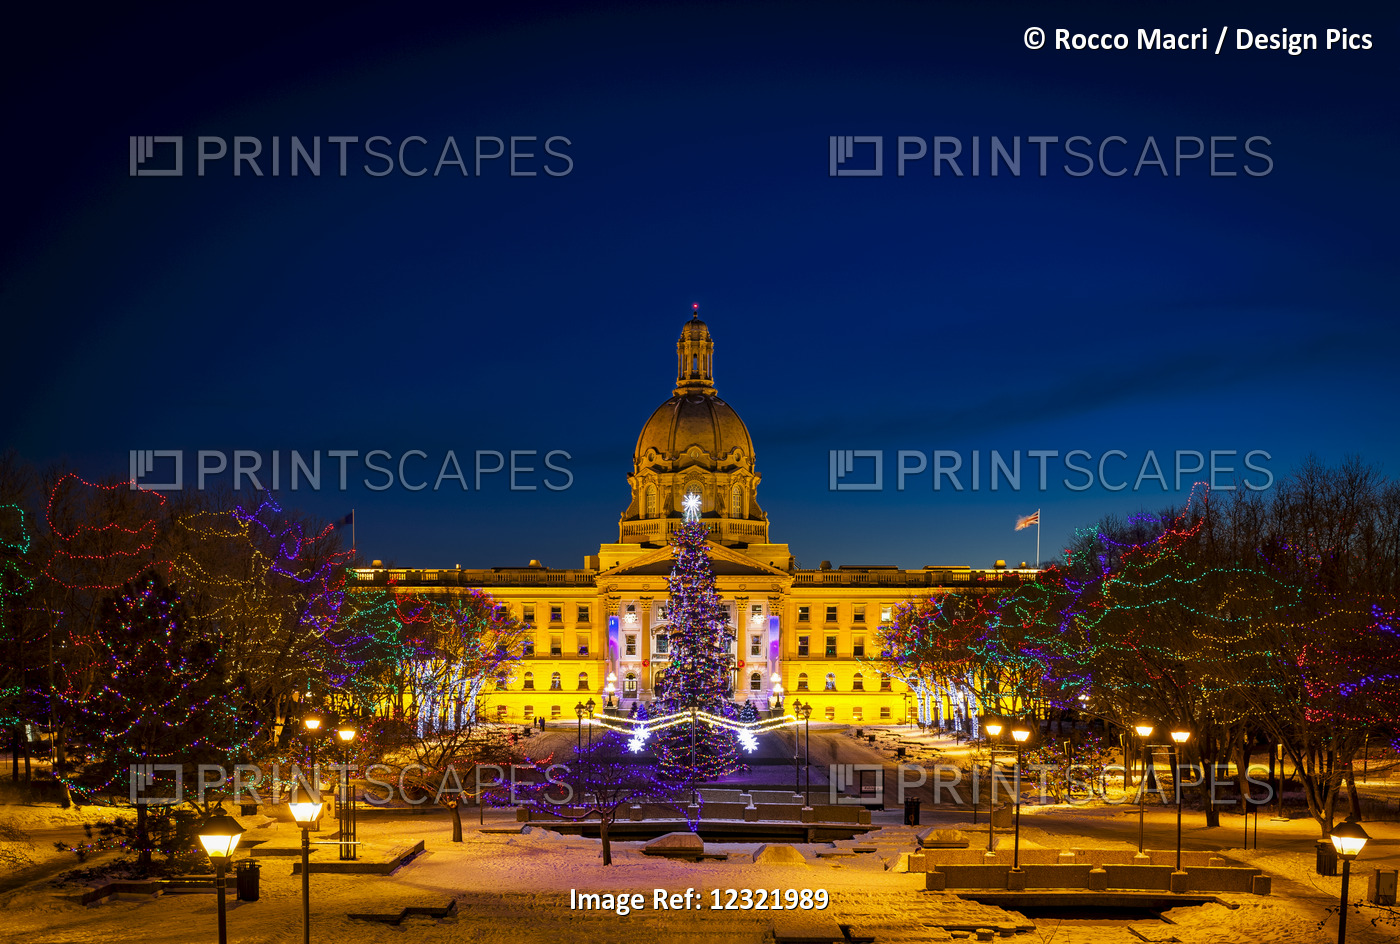 Alberta Legislature Building Illuminated And A Christmas Tree With Colourful ...